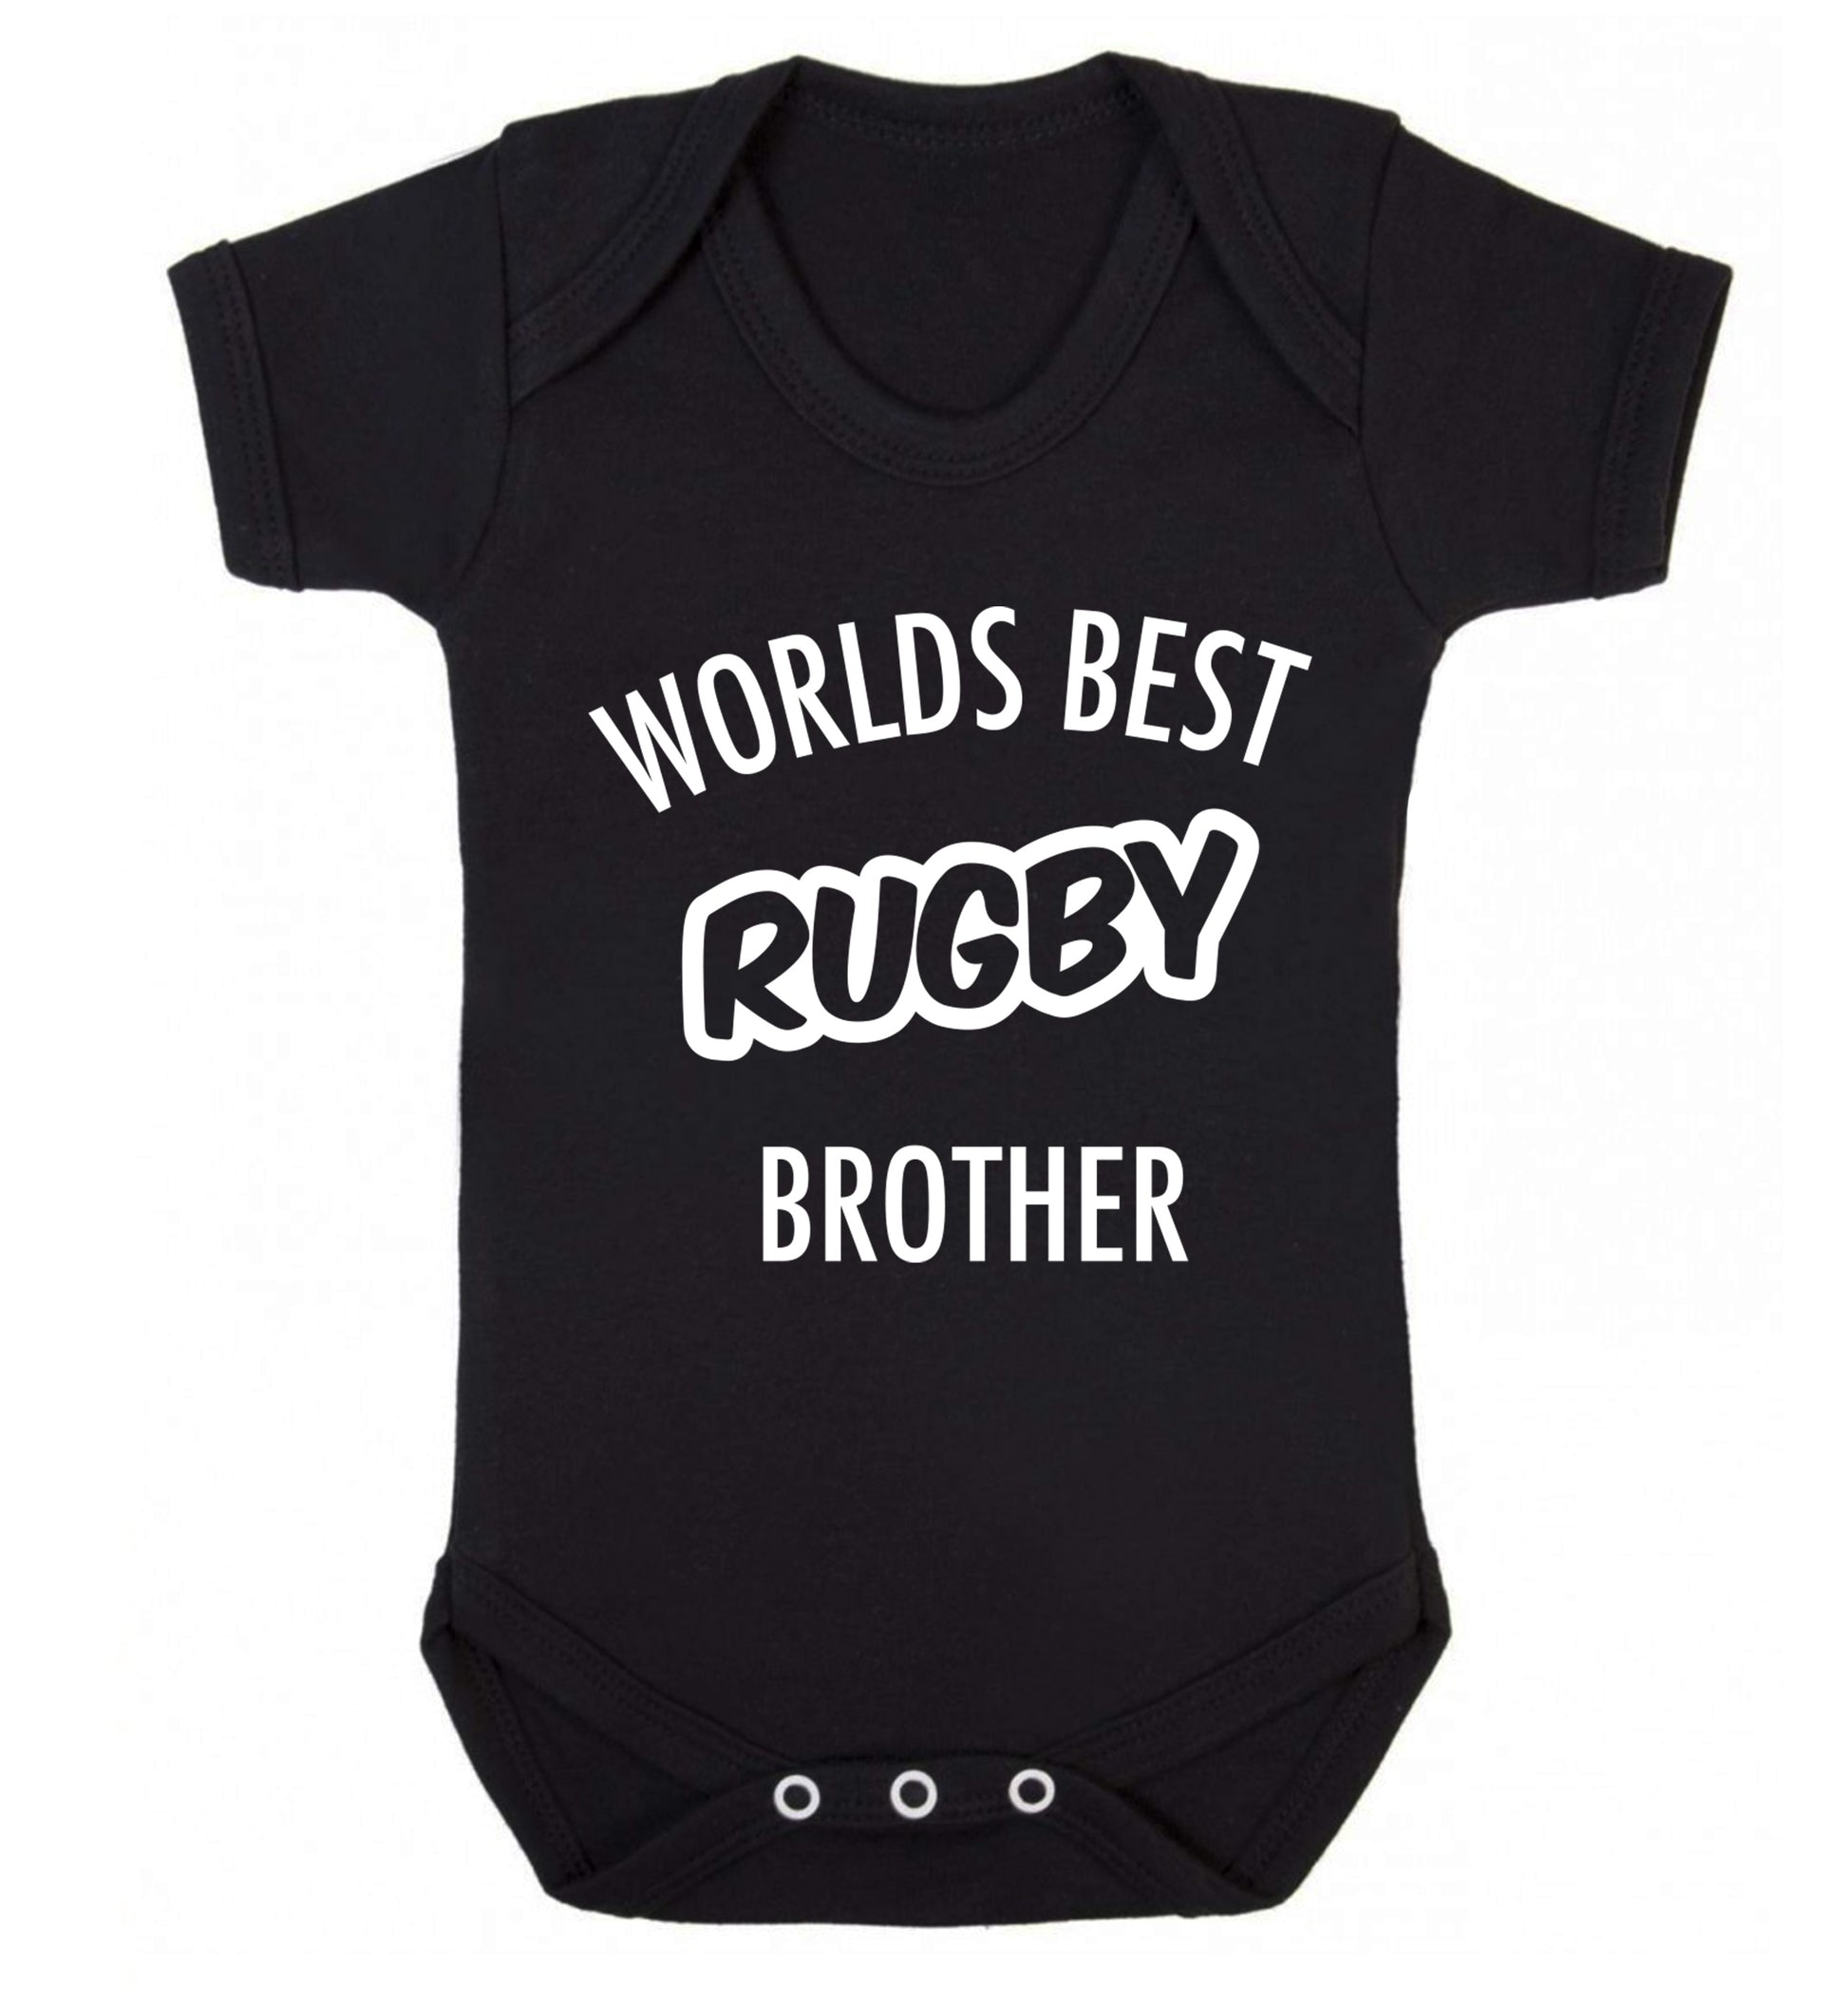 Worlds best rugby brother Baby Vest black 18-24 months